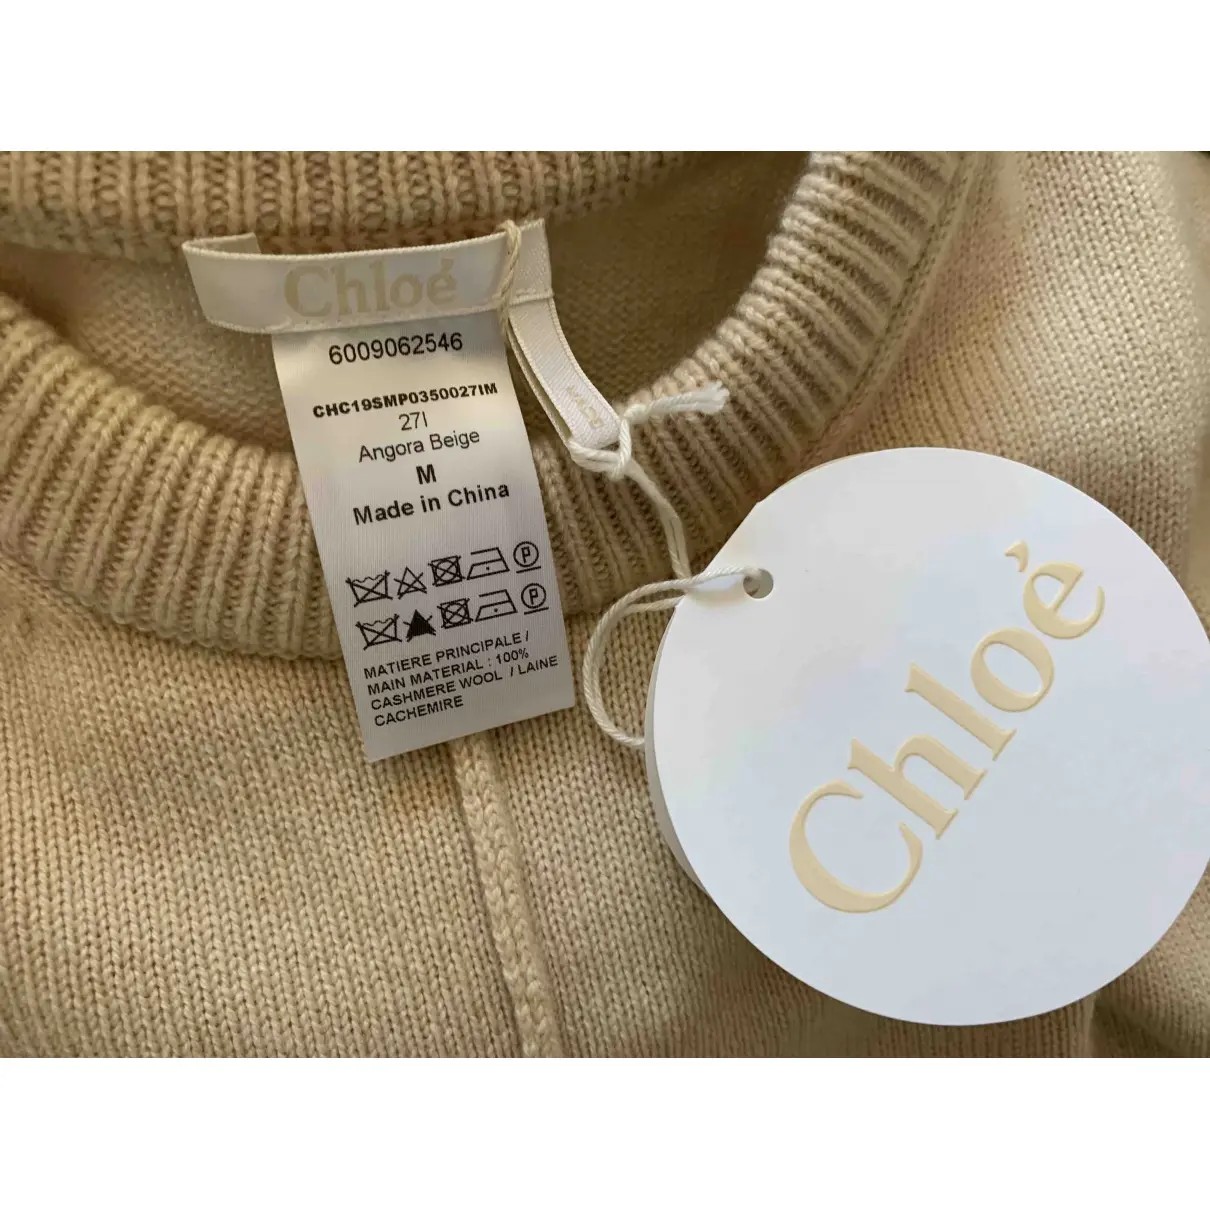 Buy Chloé Cashmere jumper online